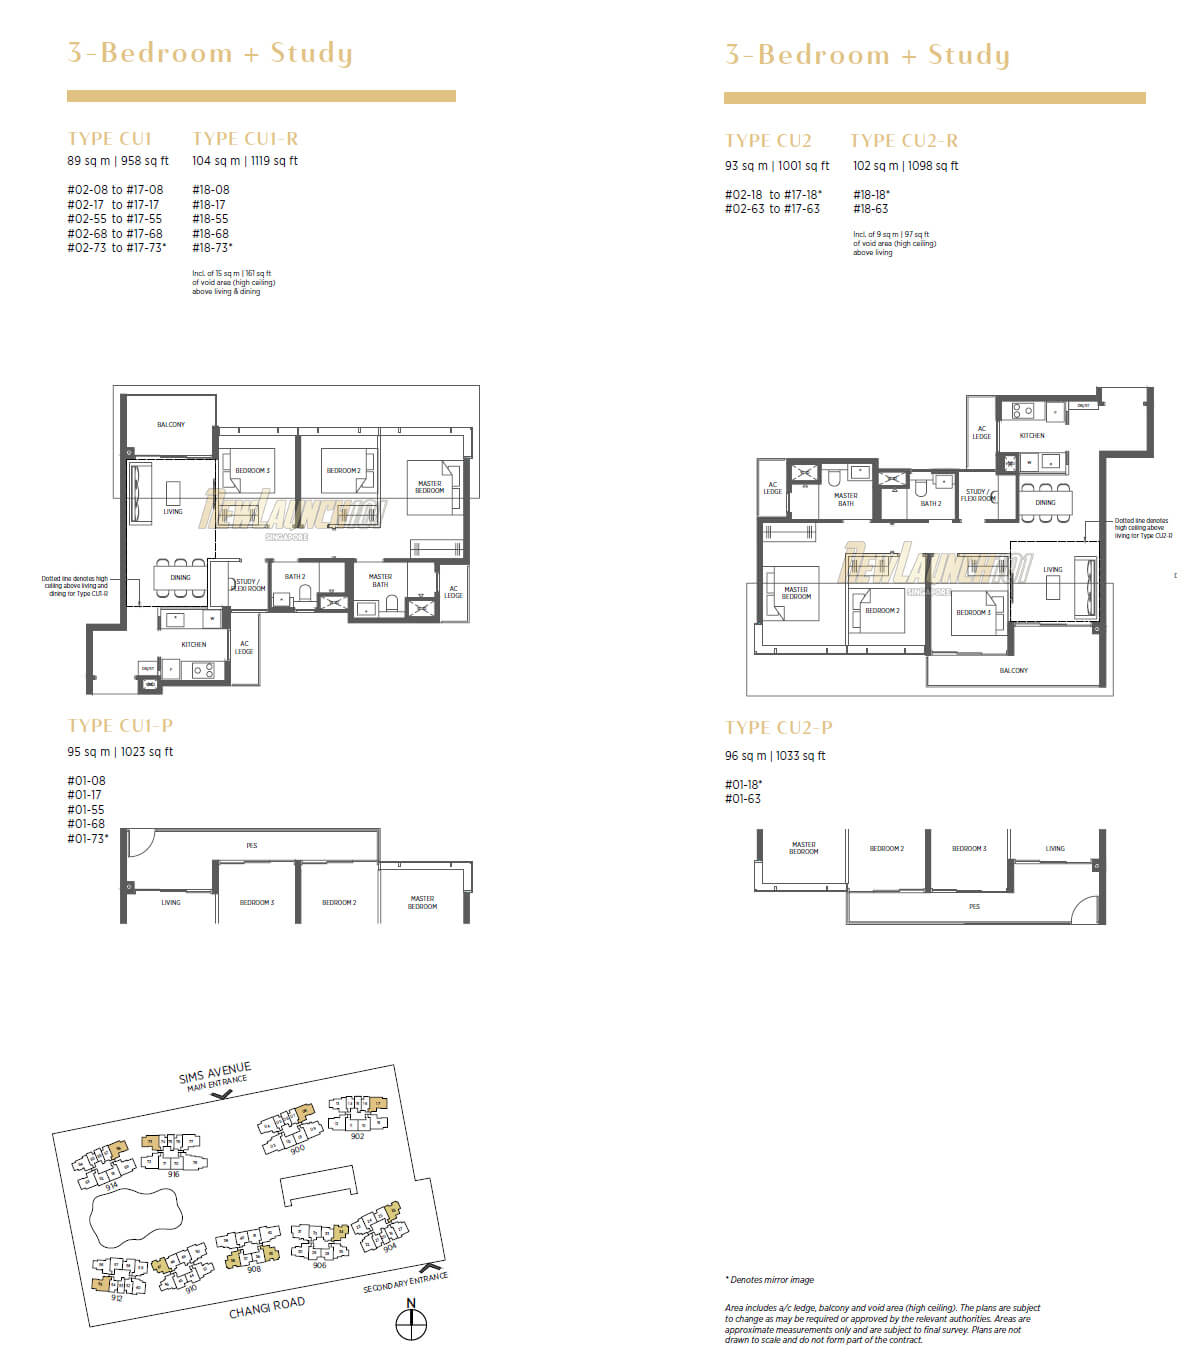 Parc Esta Floor Plan 3-Bedroom Study